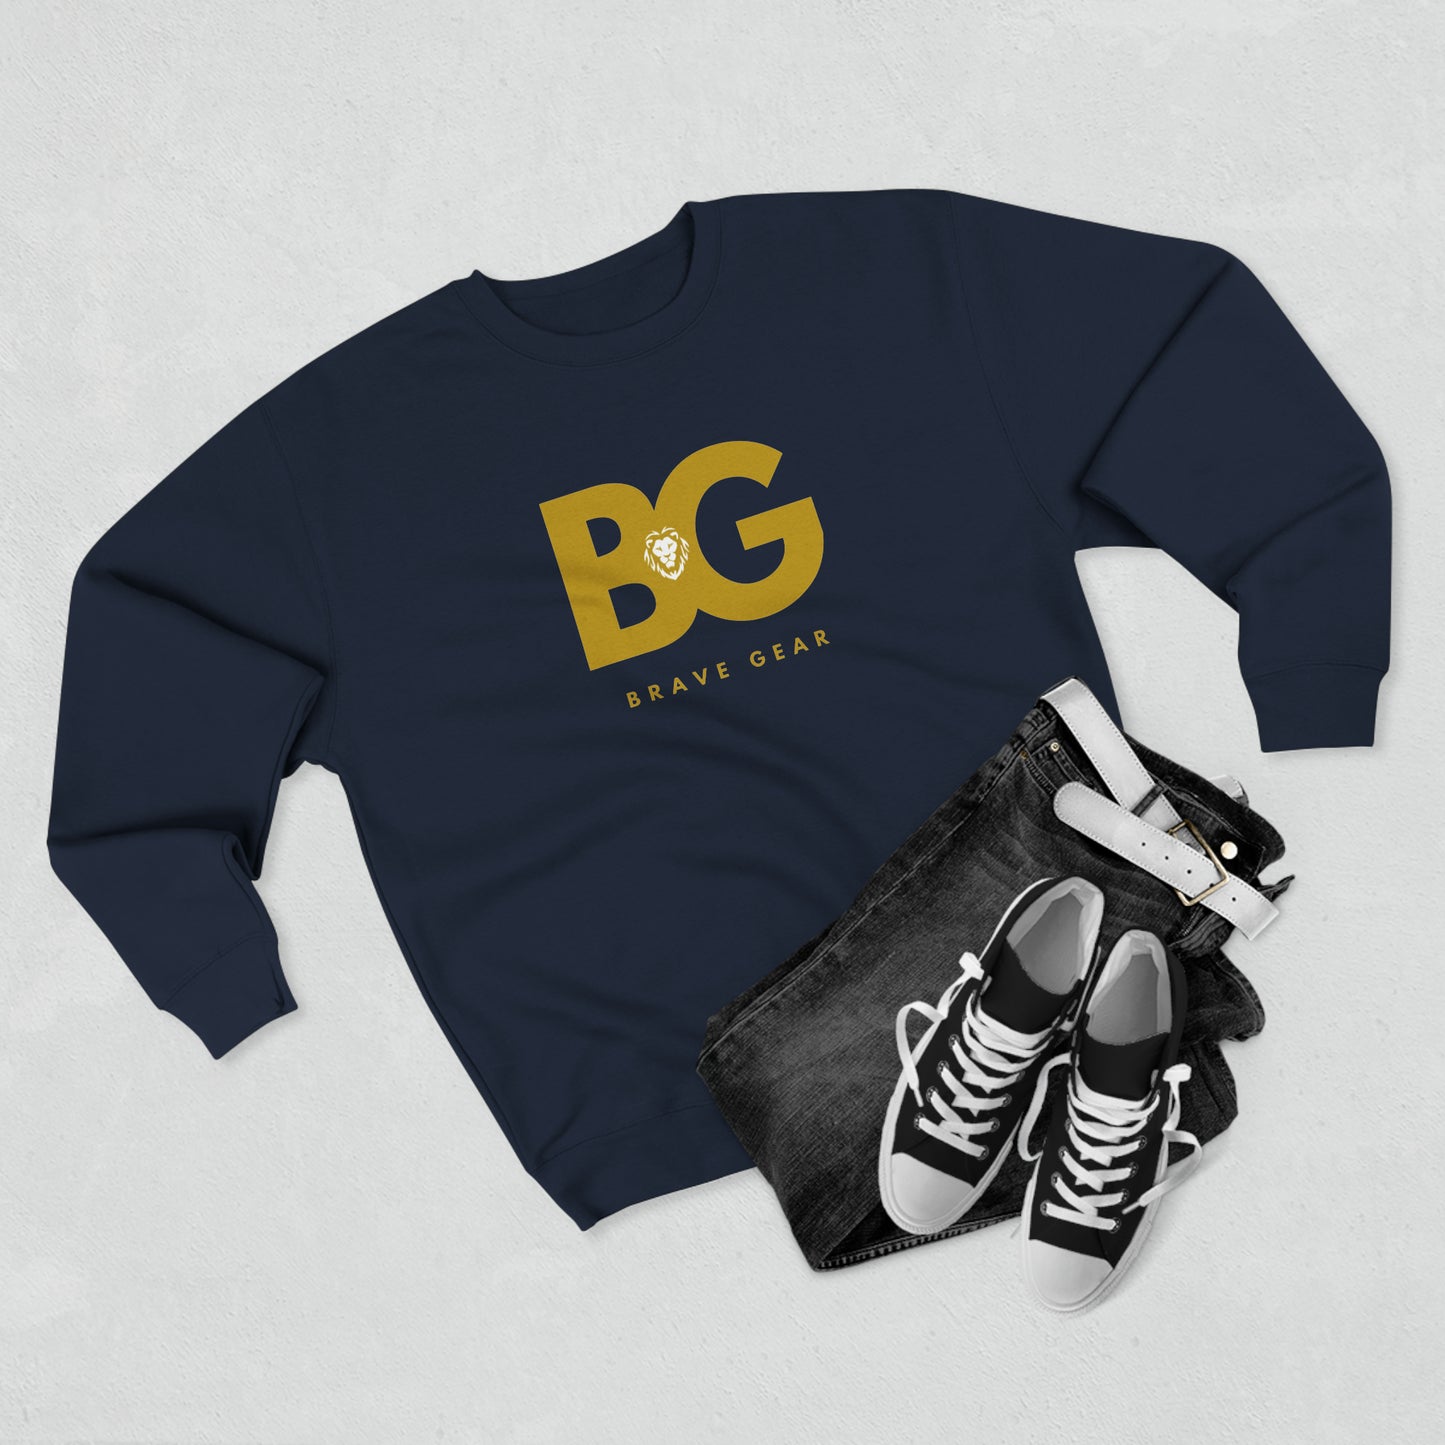 BG gold logo Premium Crewneck Sweatshirt